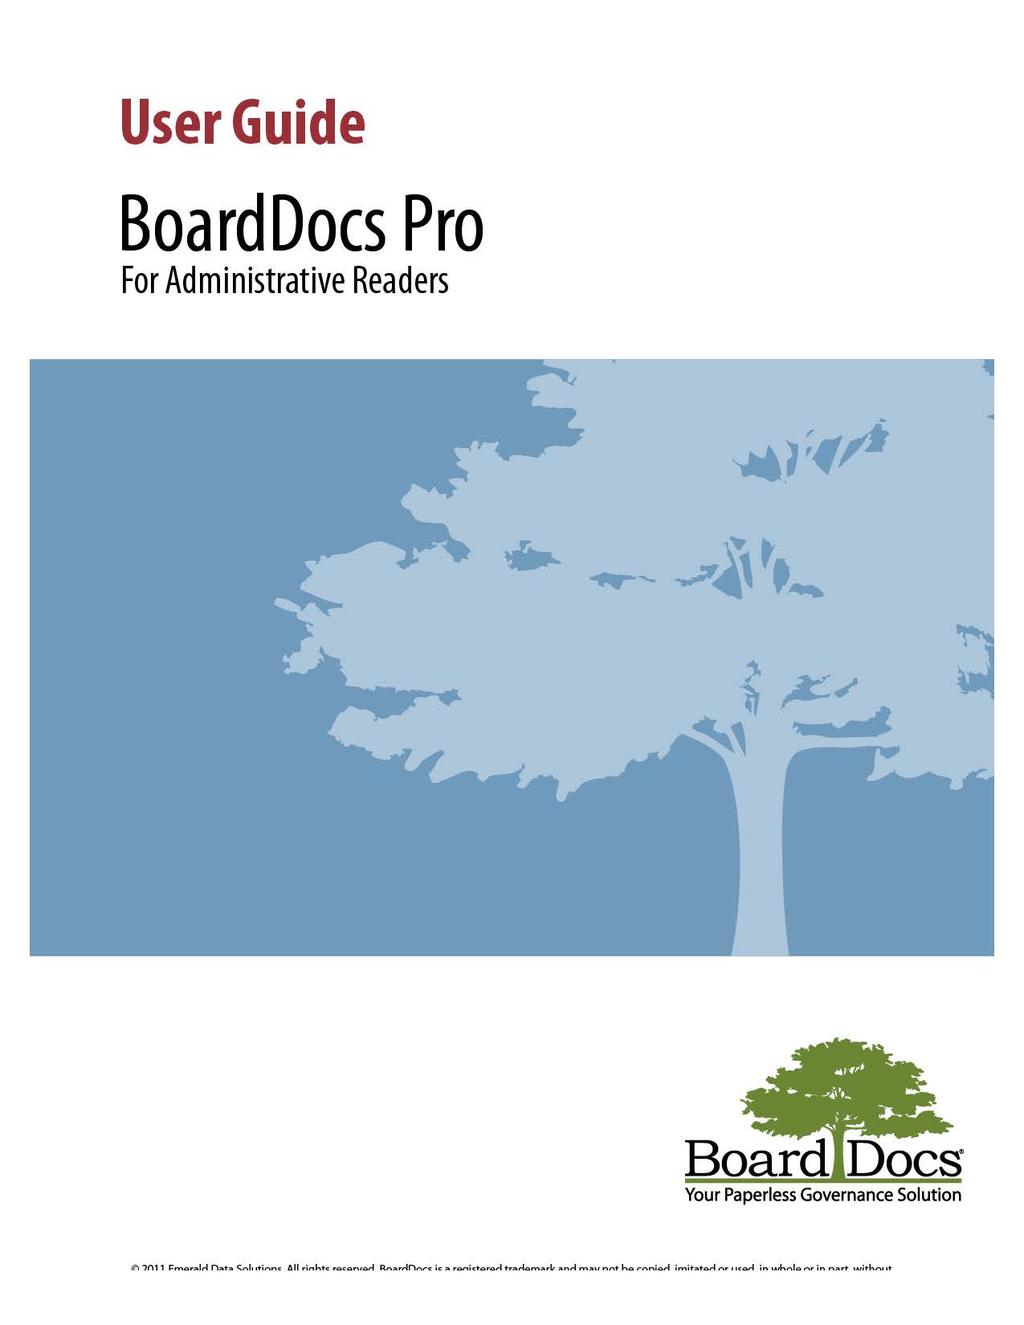 User Guide BoardDocs Pro For